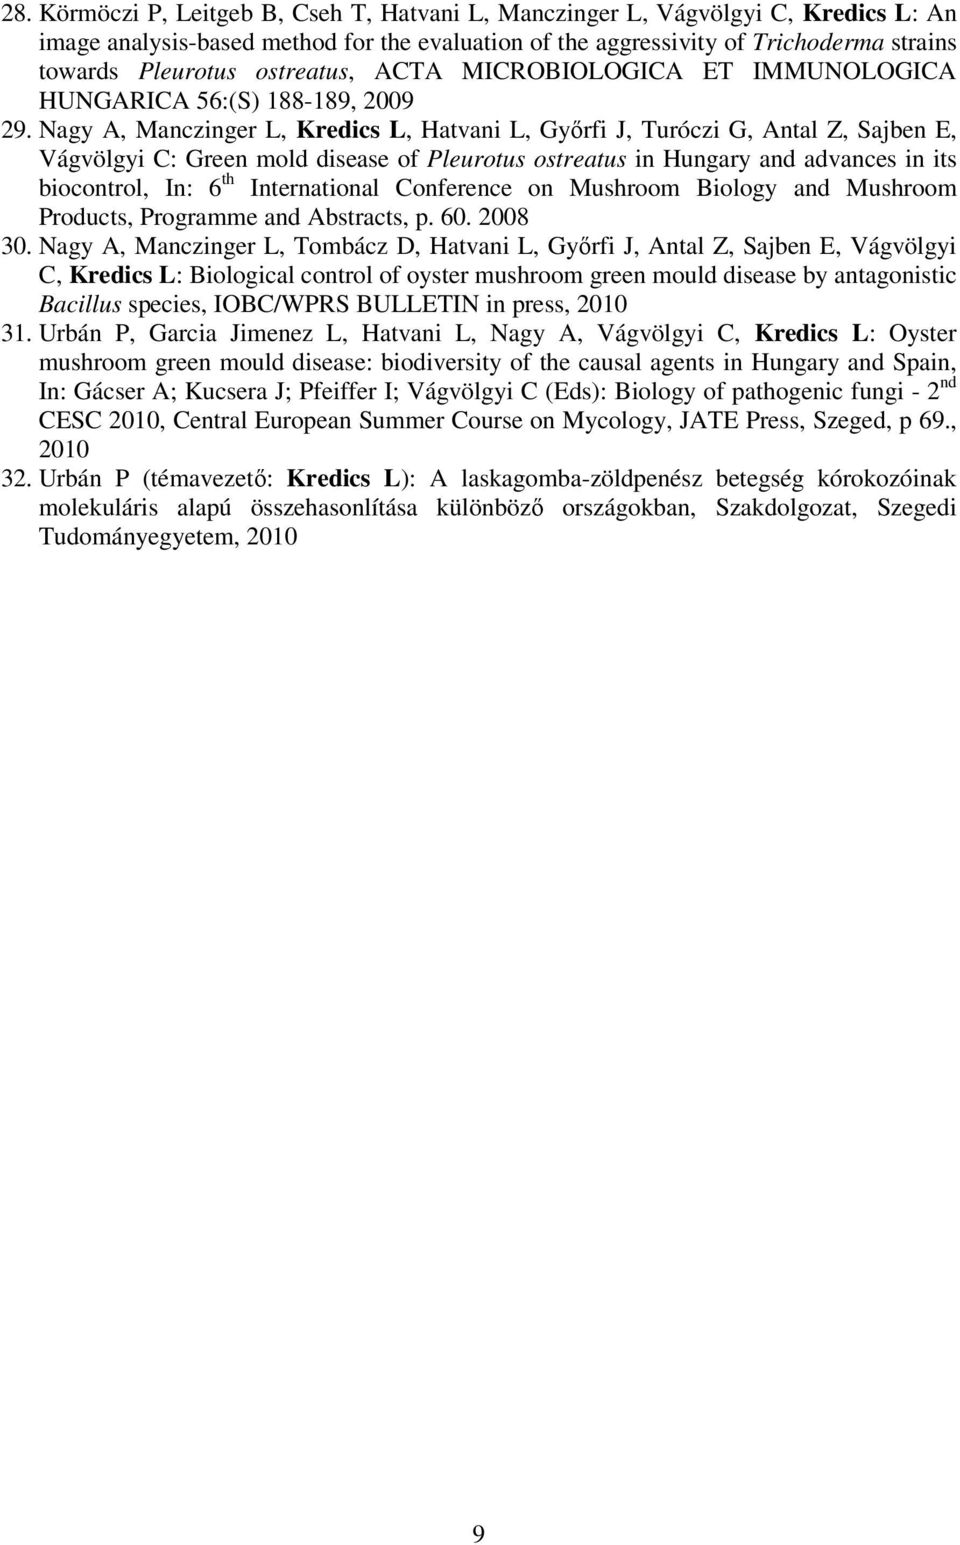 Nagy A, Manczinger L, Kredics L, Hatvani L, Gyırfi J, Turóczi G, Antal Z, Sajben E, Vágvölgyi C: Green mold disease of Pleurotus ostreatus in Hungary and advances in its biocontrol, In: 6 th